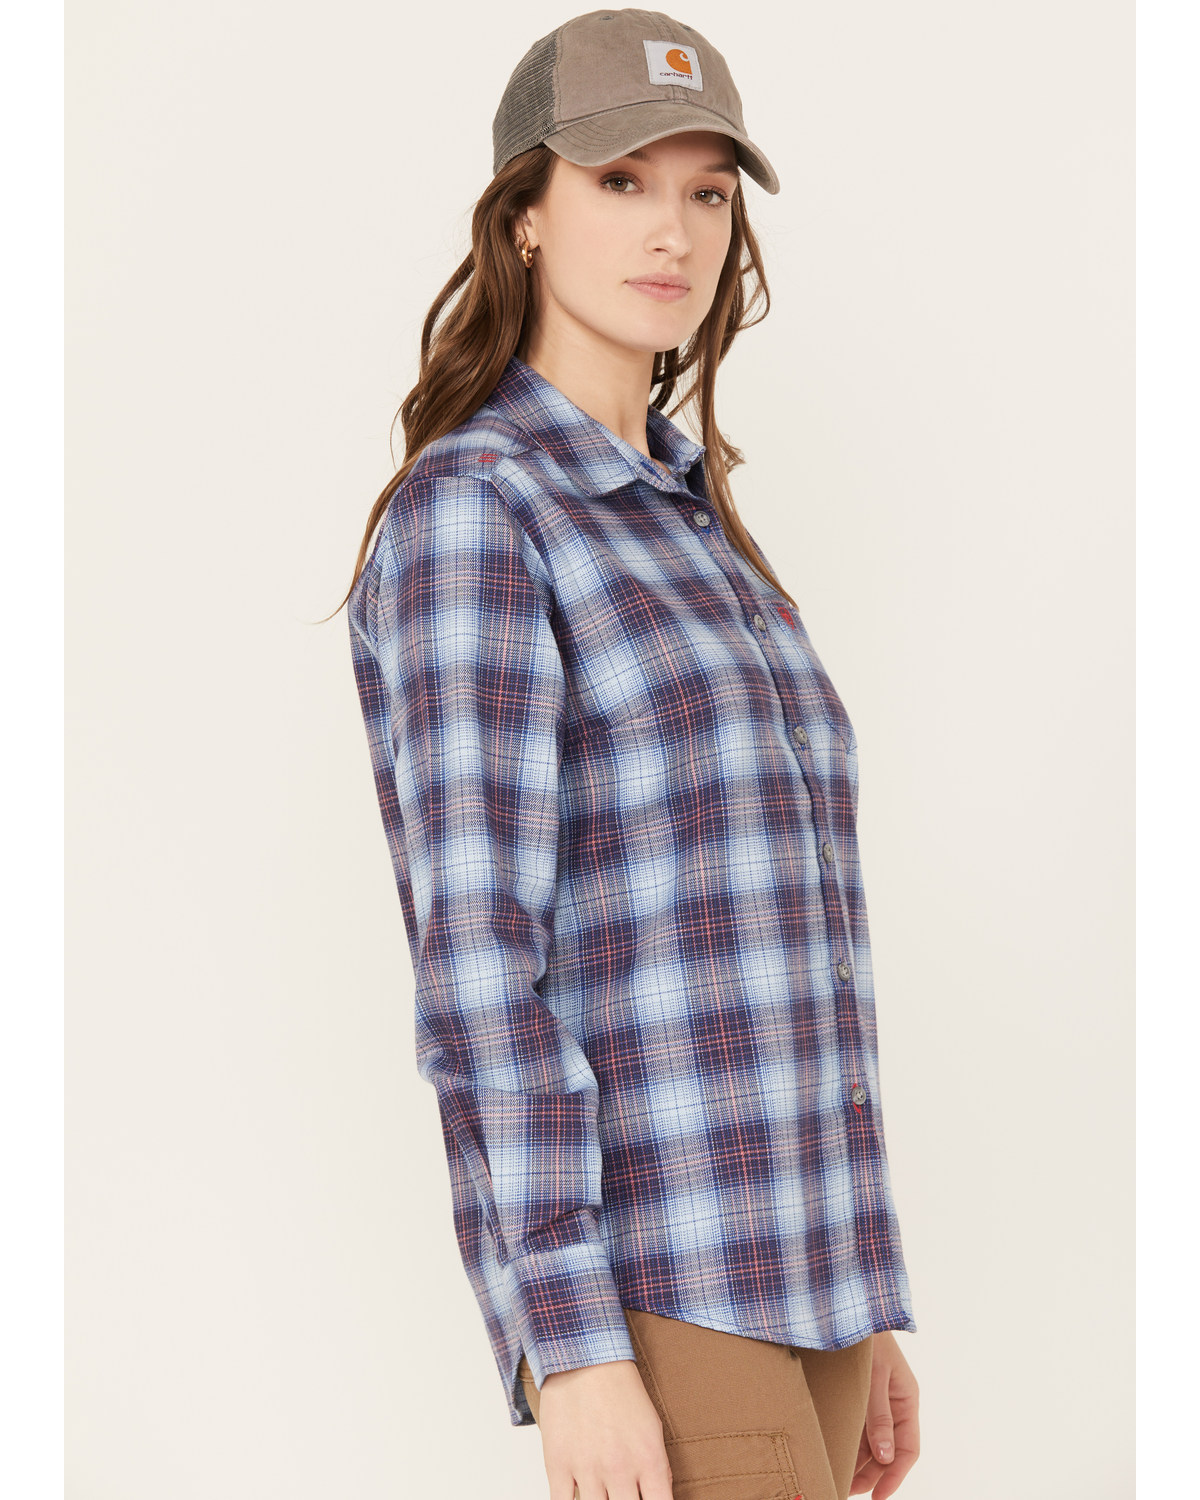 Ariat Women's FR Plaid Print Long Sleeve Button Down Work Shirt